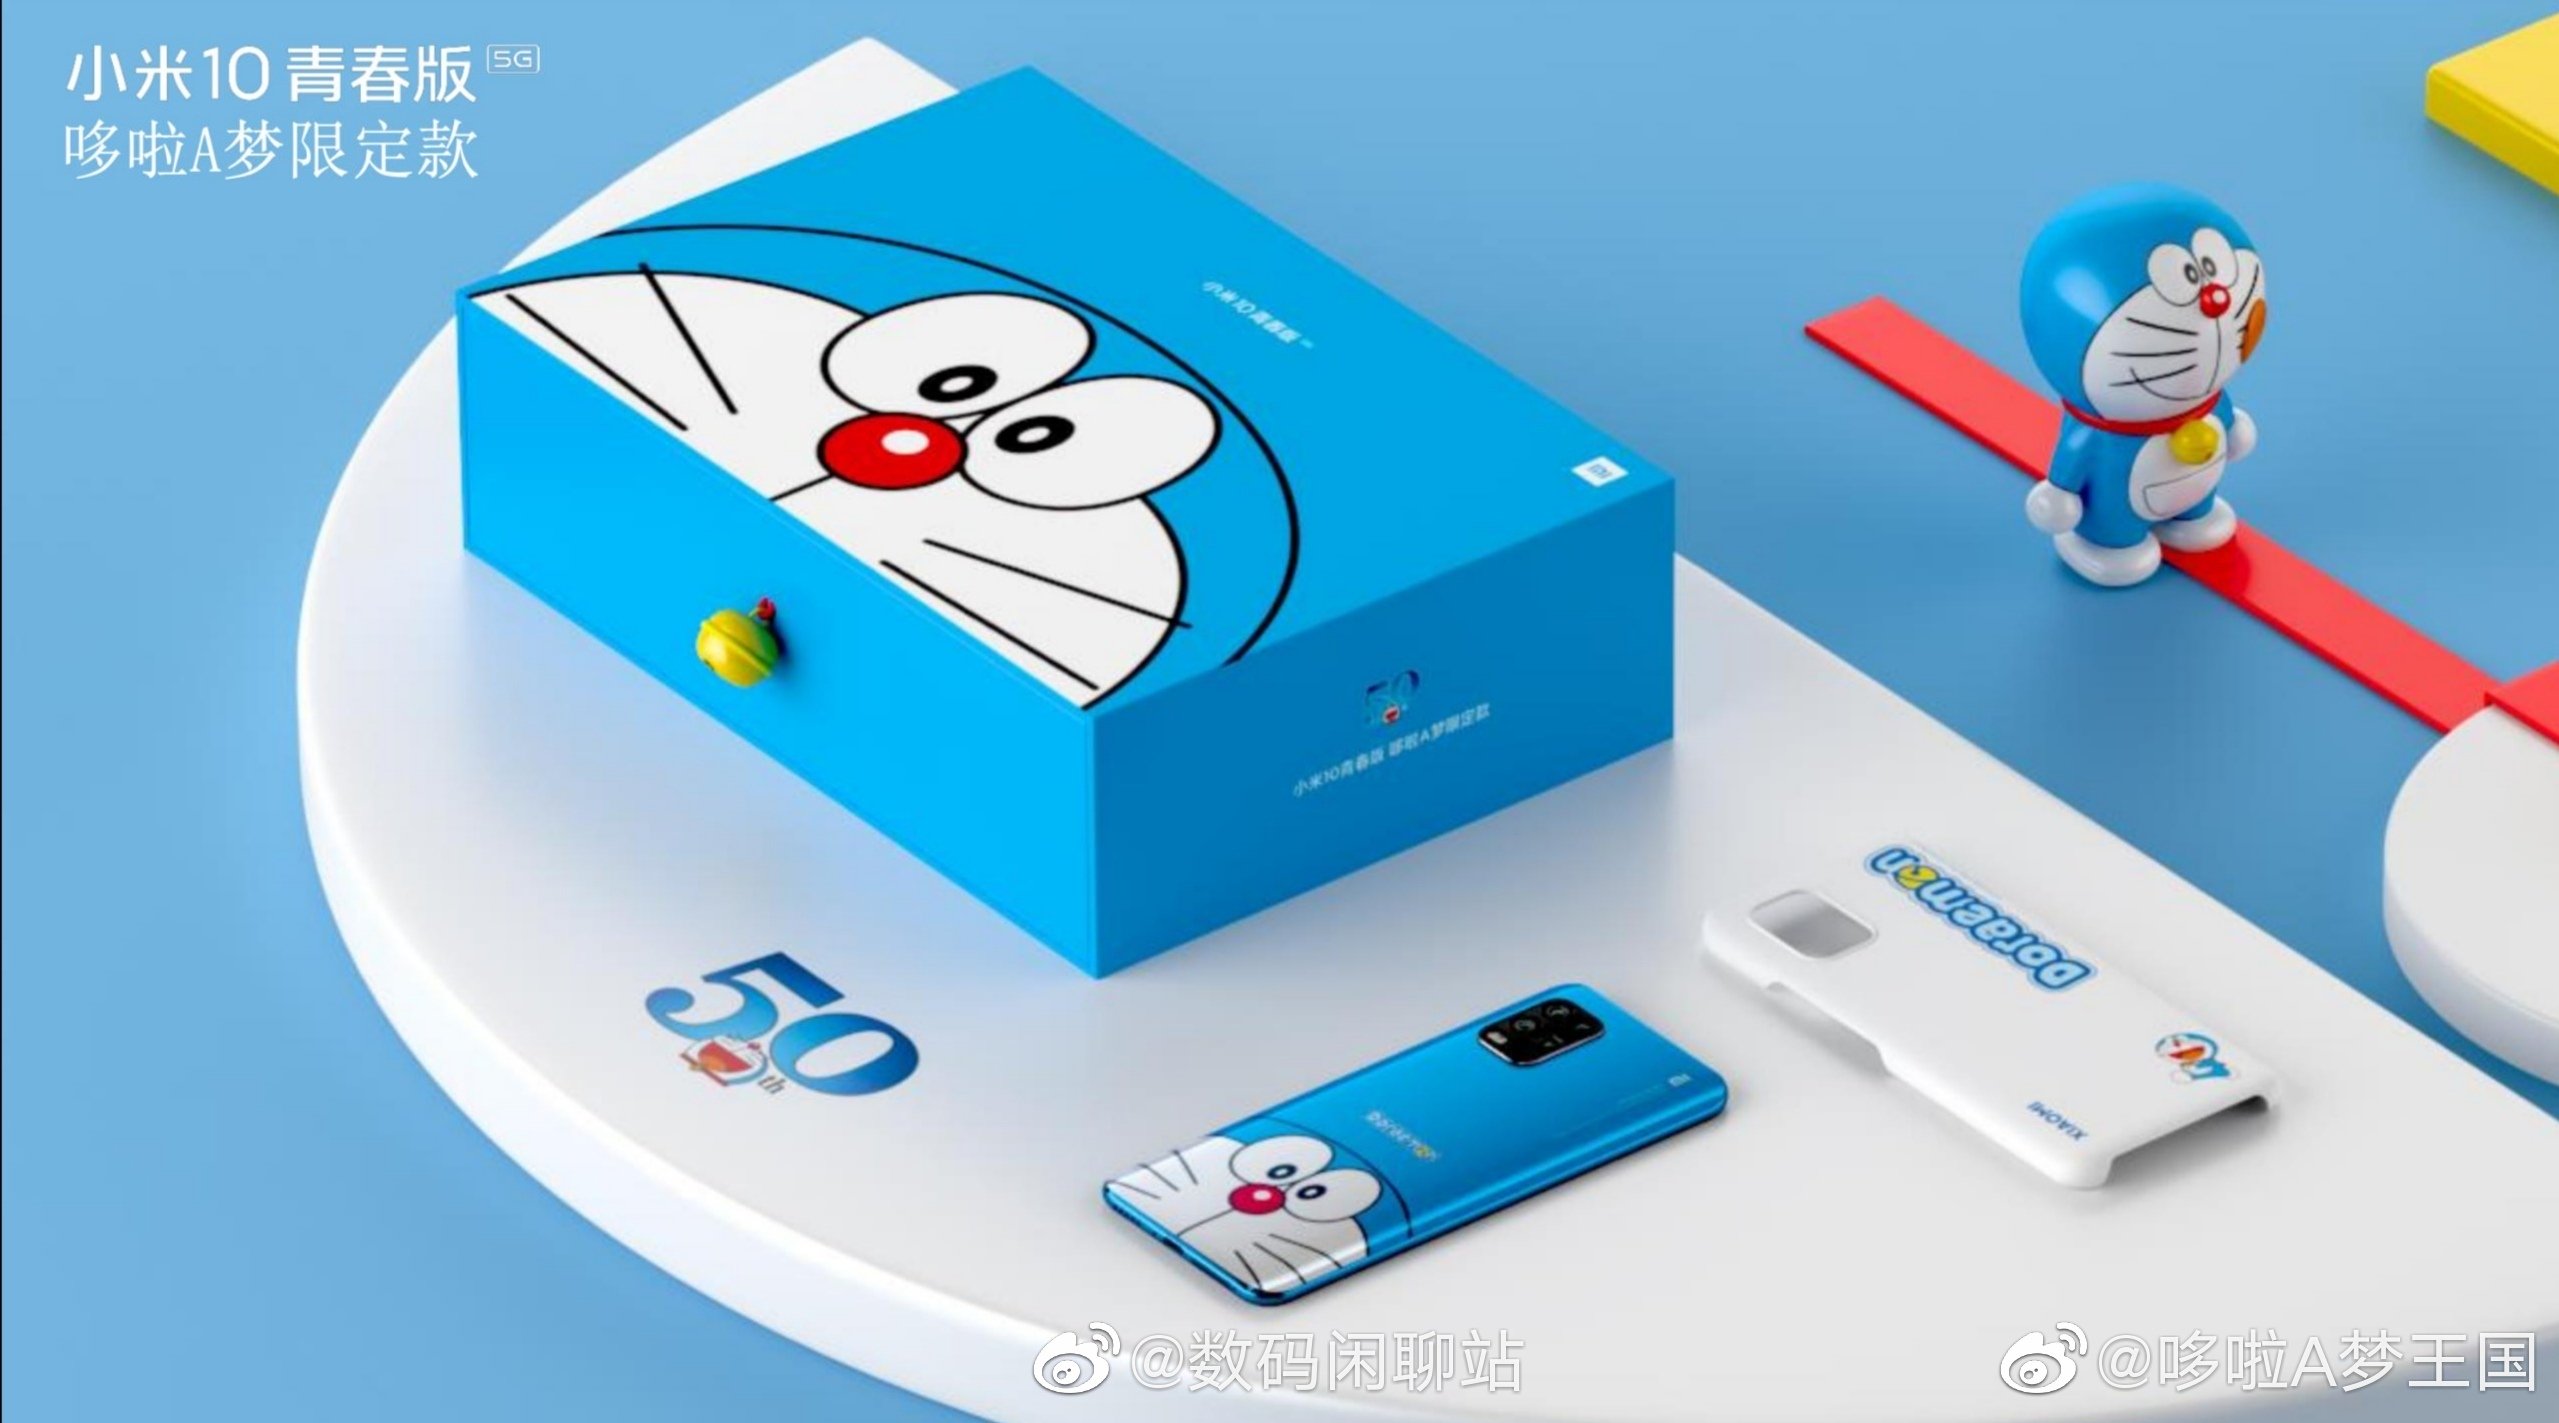 Mi 10 Youth Doraemon Edition leaks ahead of launch